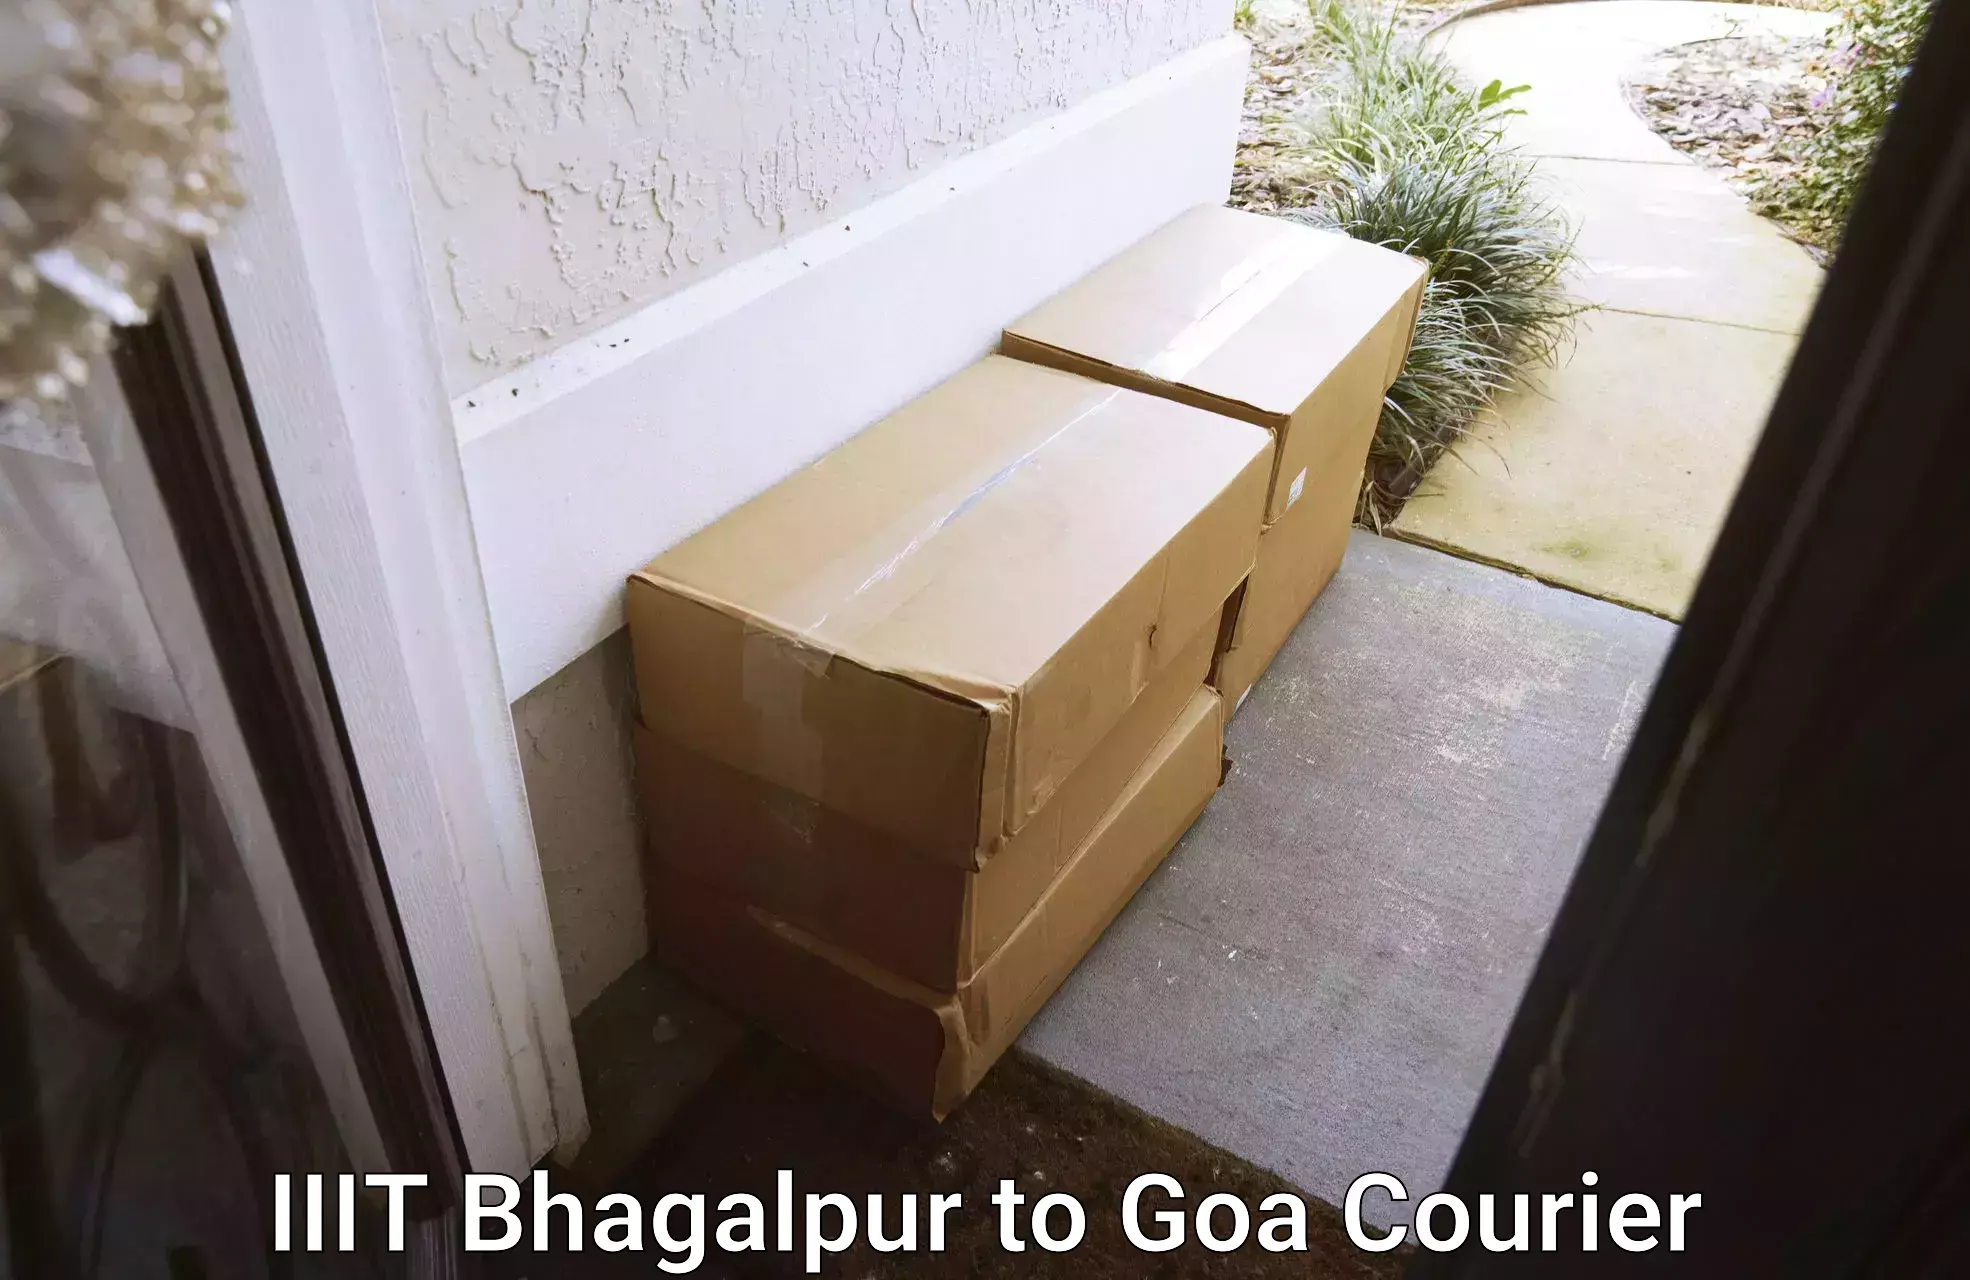 Professional moving company IIIT Bhagalpur to Margao